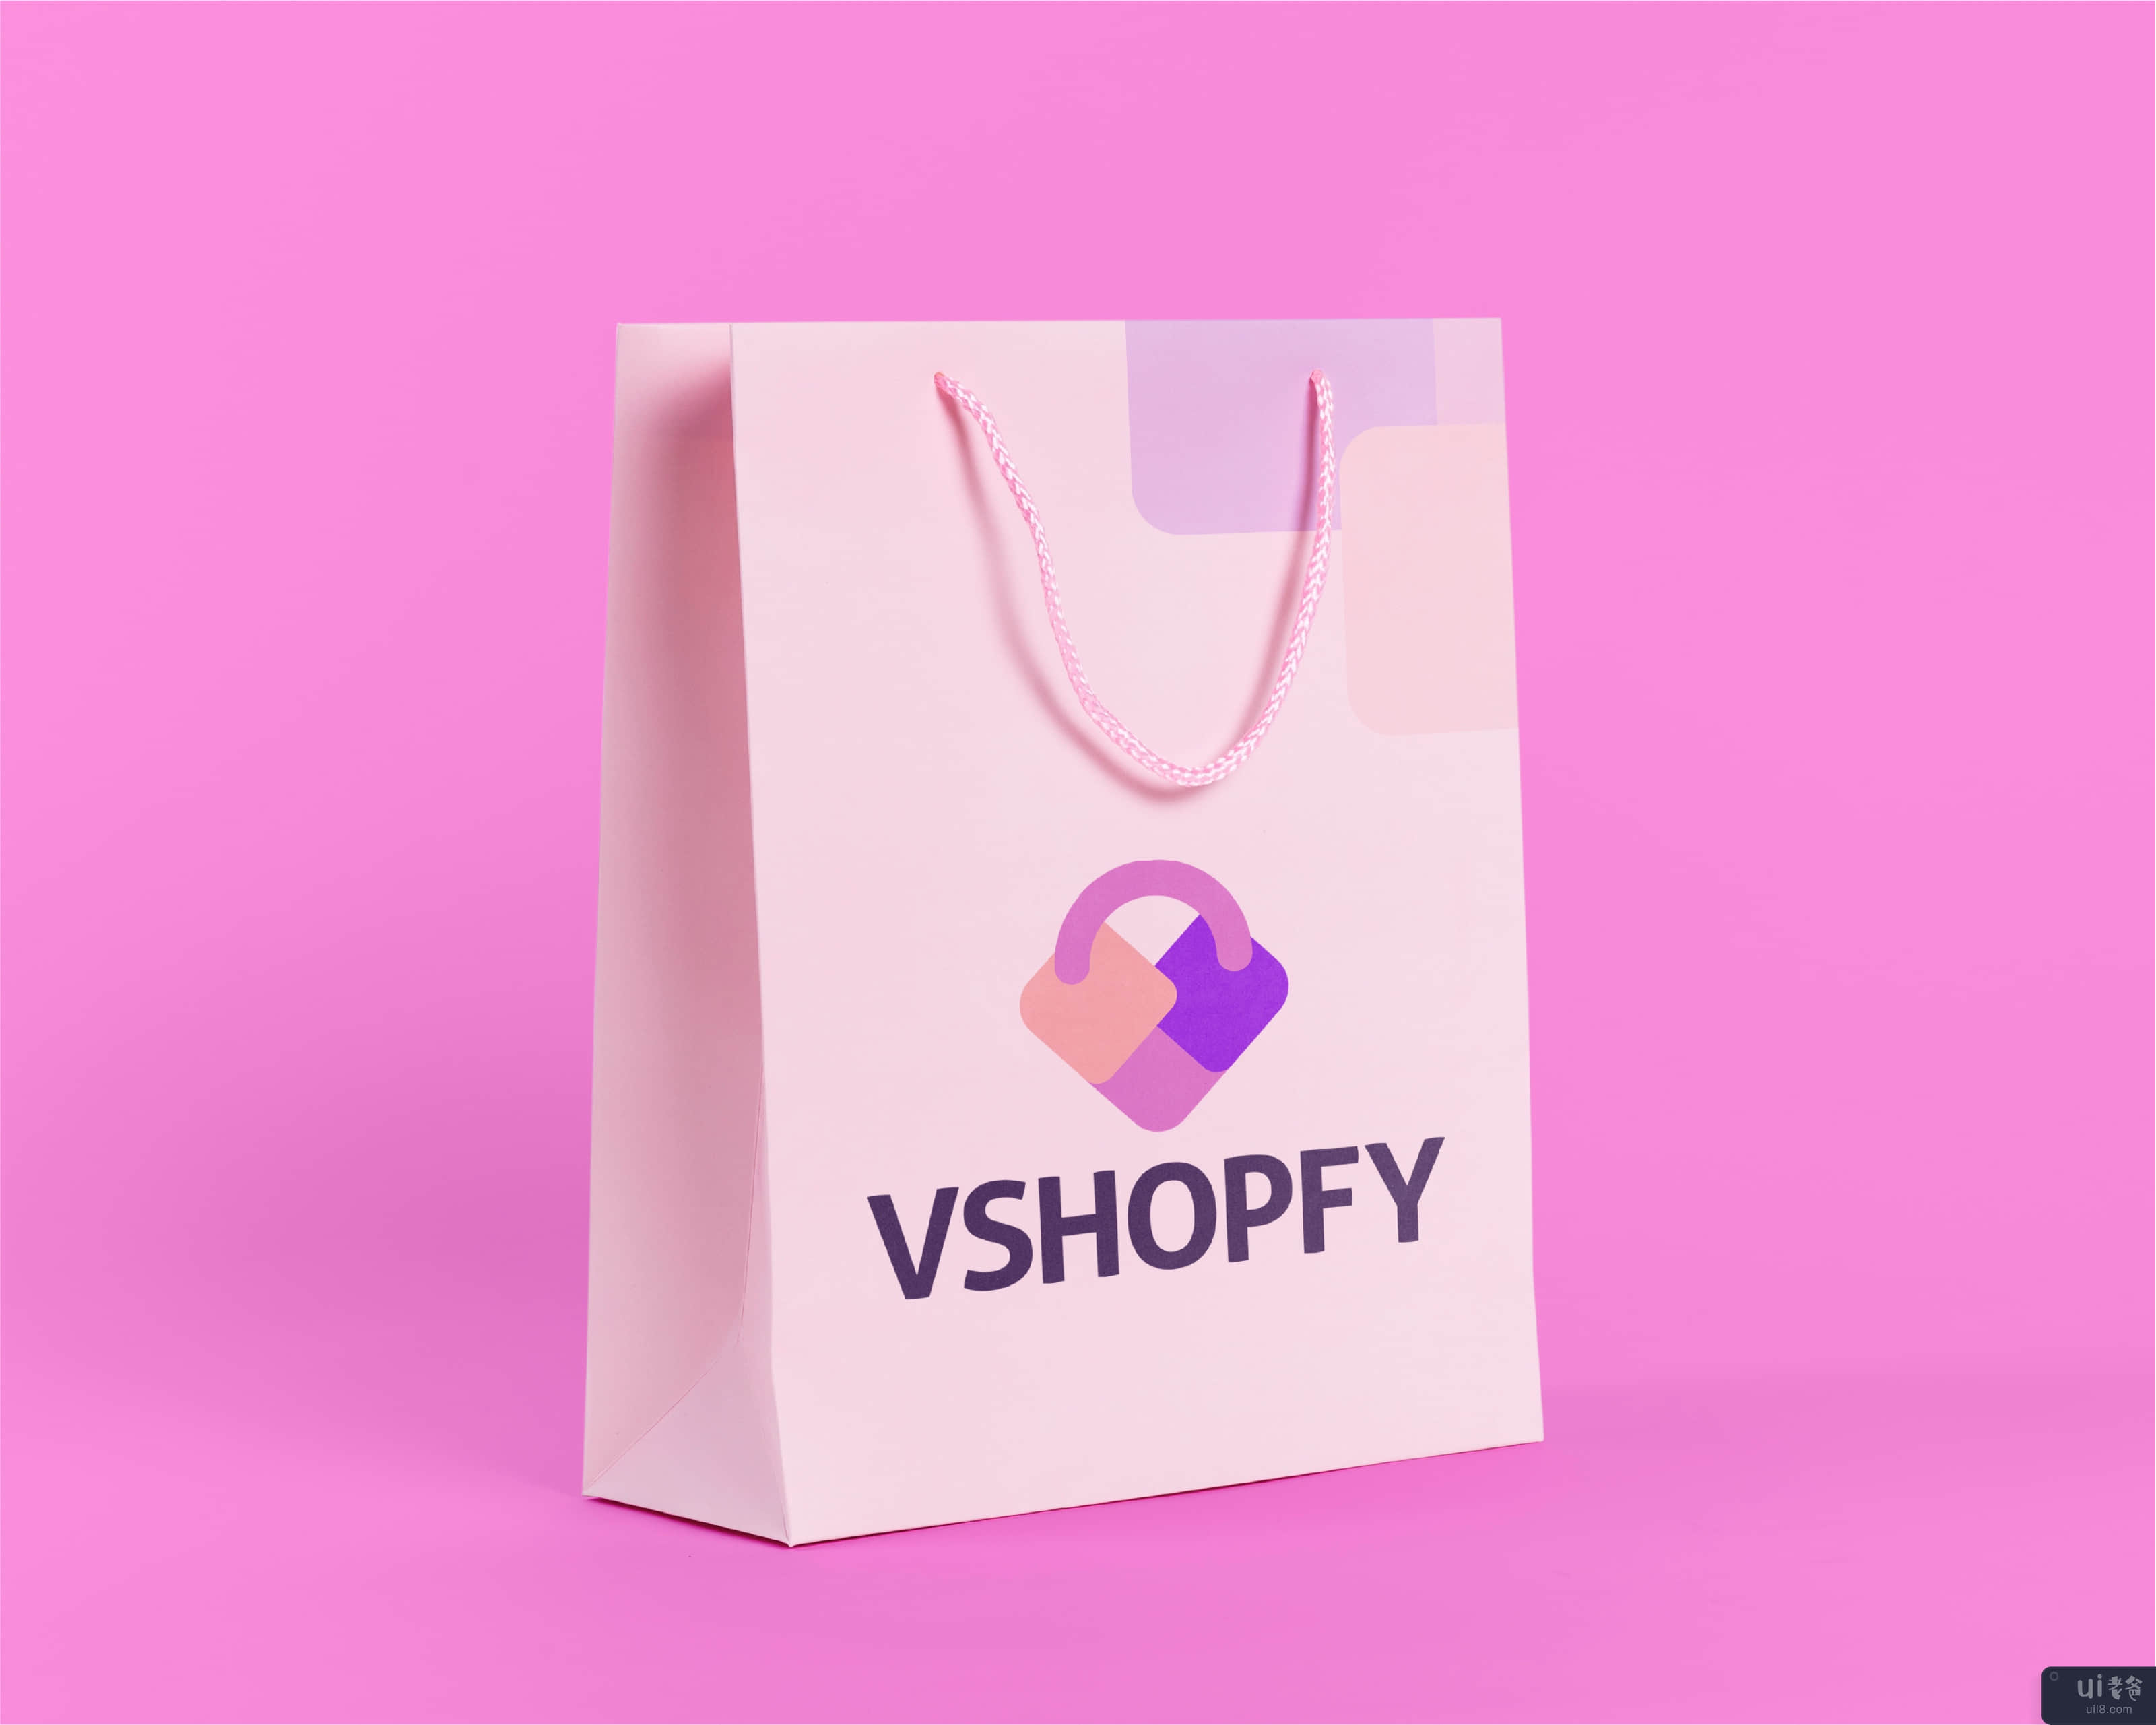 Vshopfy 在线购物应用程序徽标品牌(Vshopfy online shopping app logo branding)插图